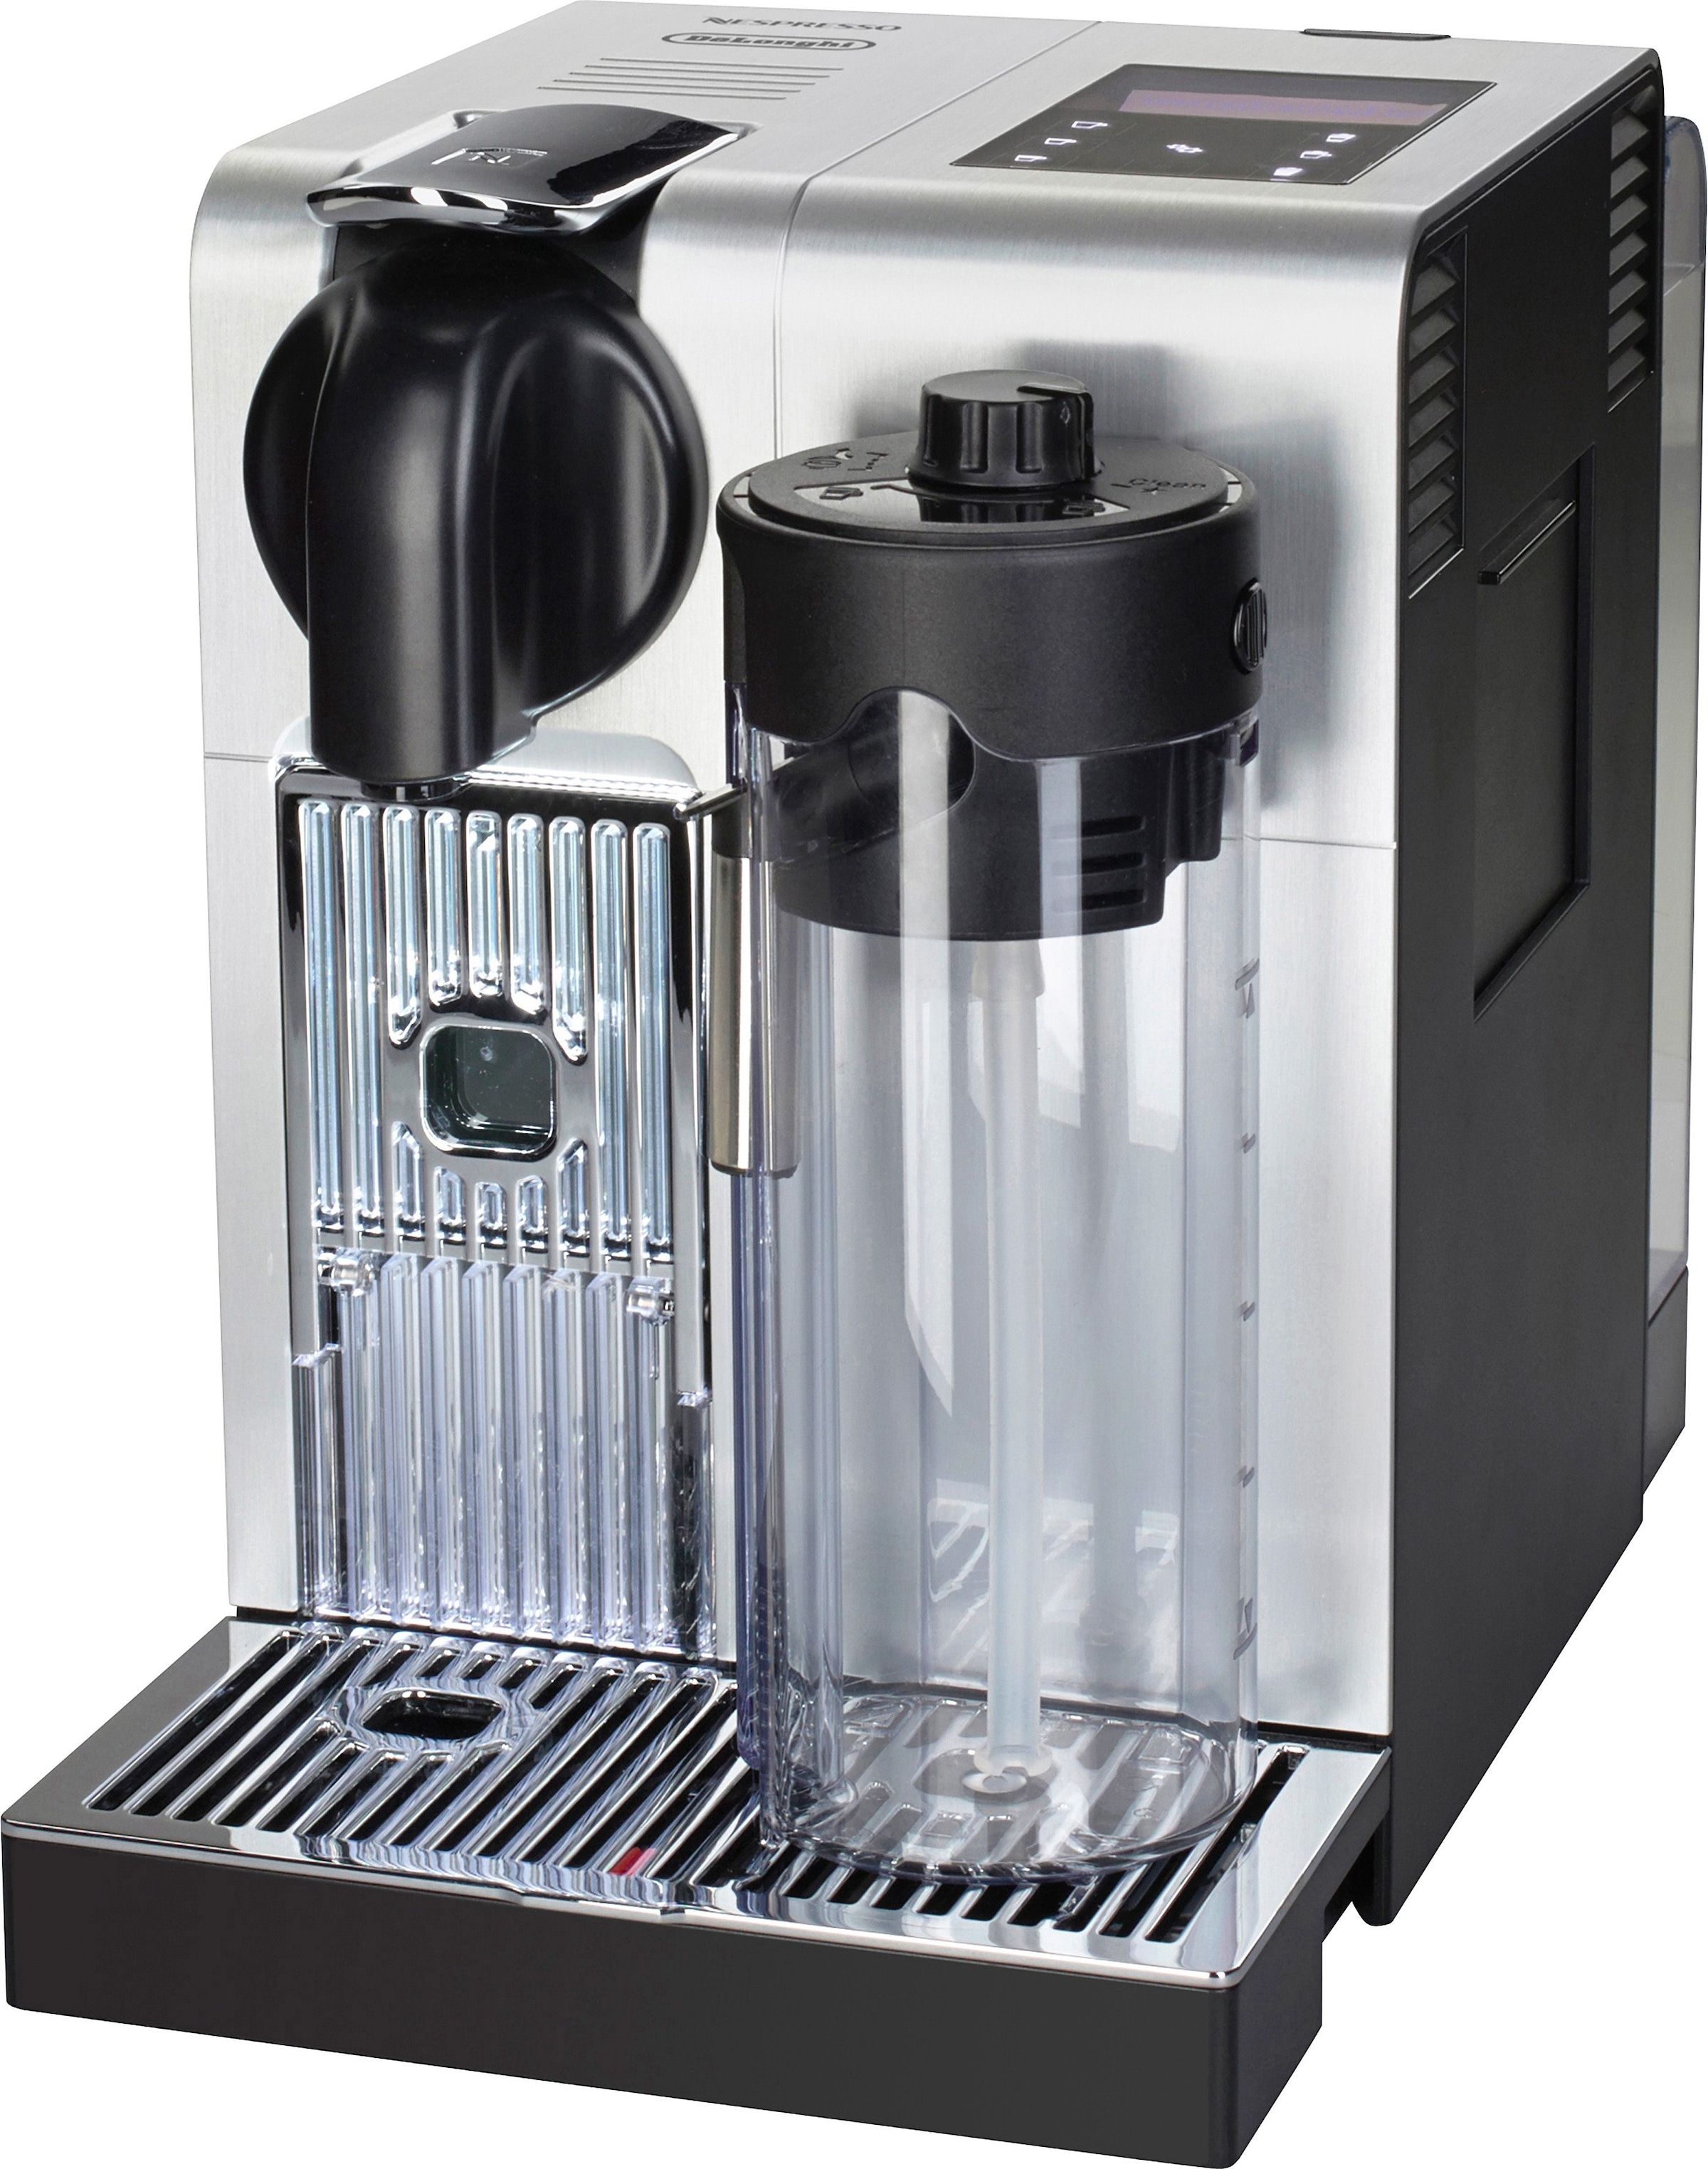 Nespresso Kapselmaschine »Lattissima Pro EN 750.MB von DeLonghi, Silver«,  inkl. Willkommenspaket mit 14 Kapseln jetzt bei OTTO